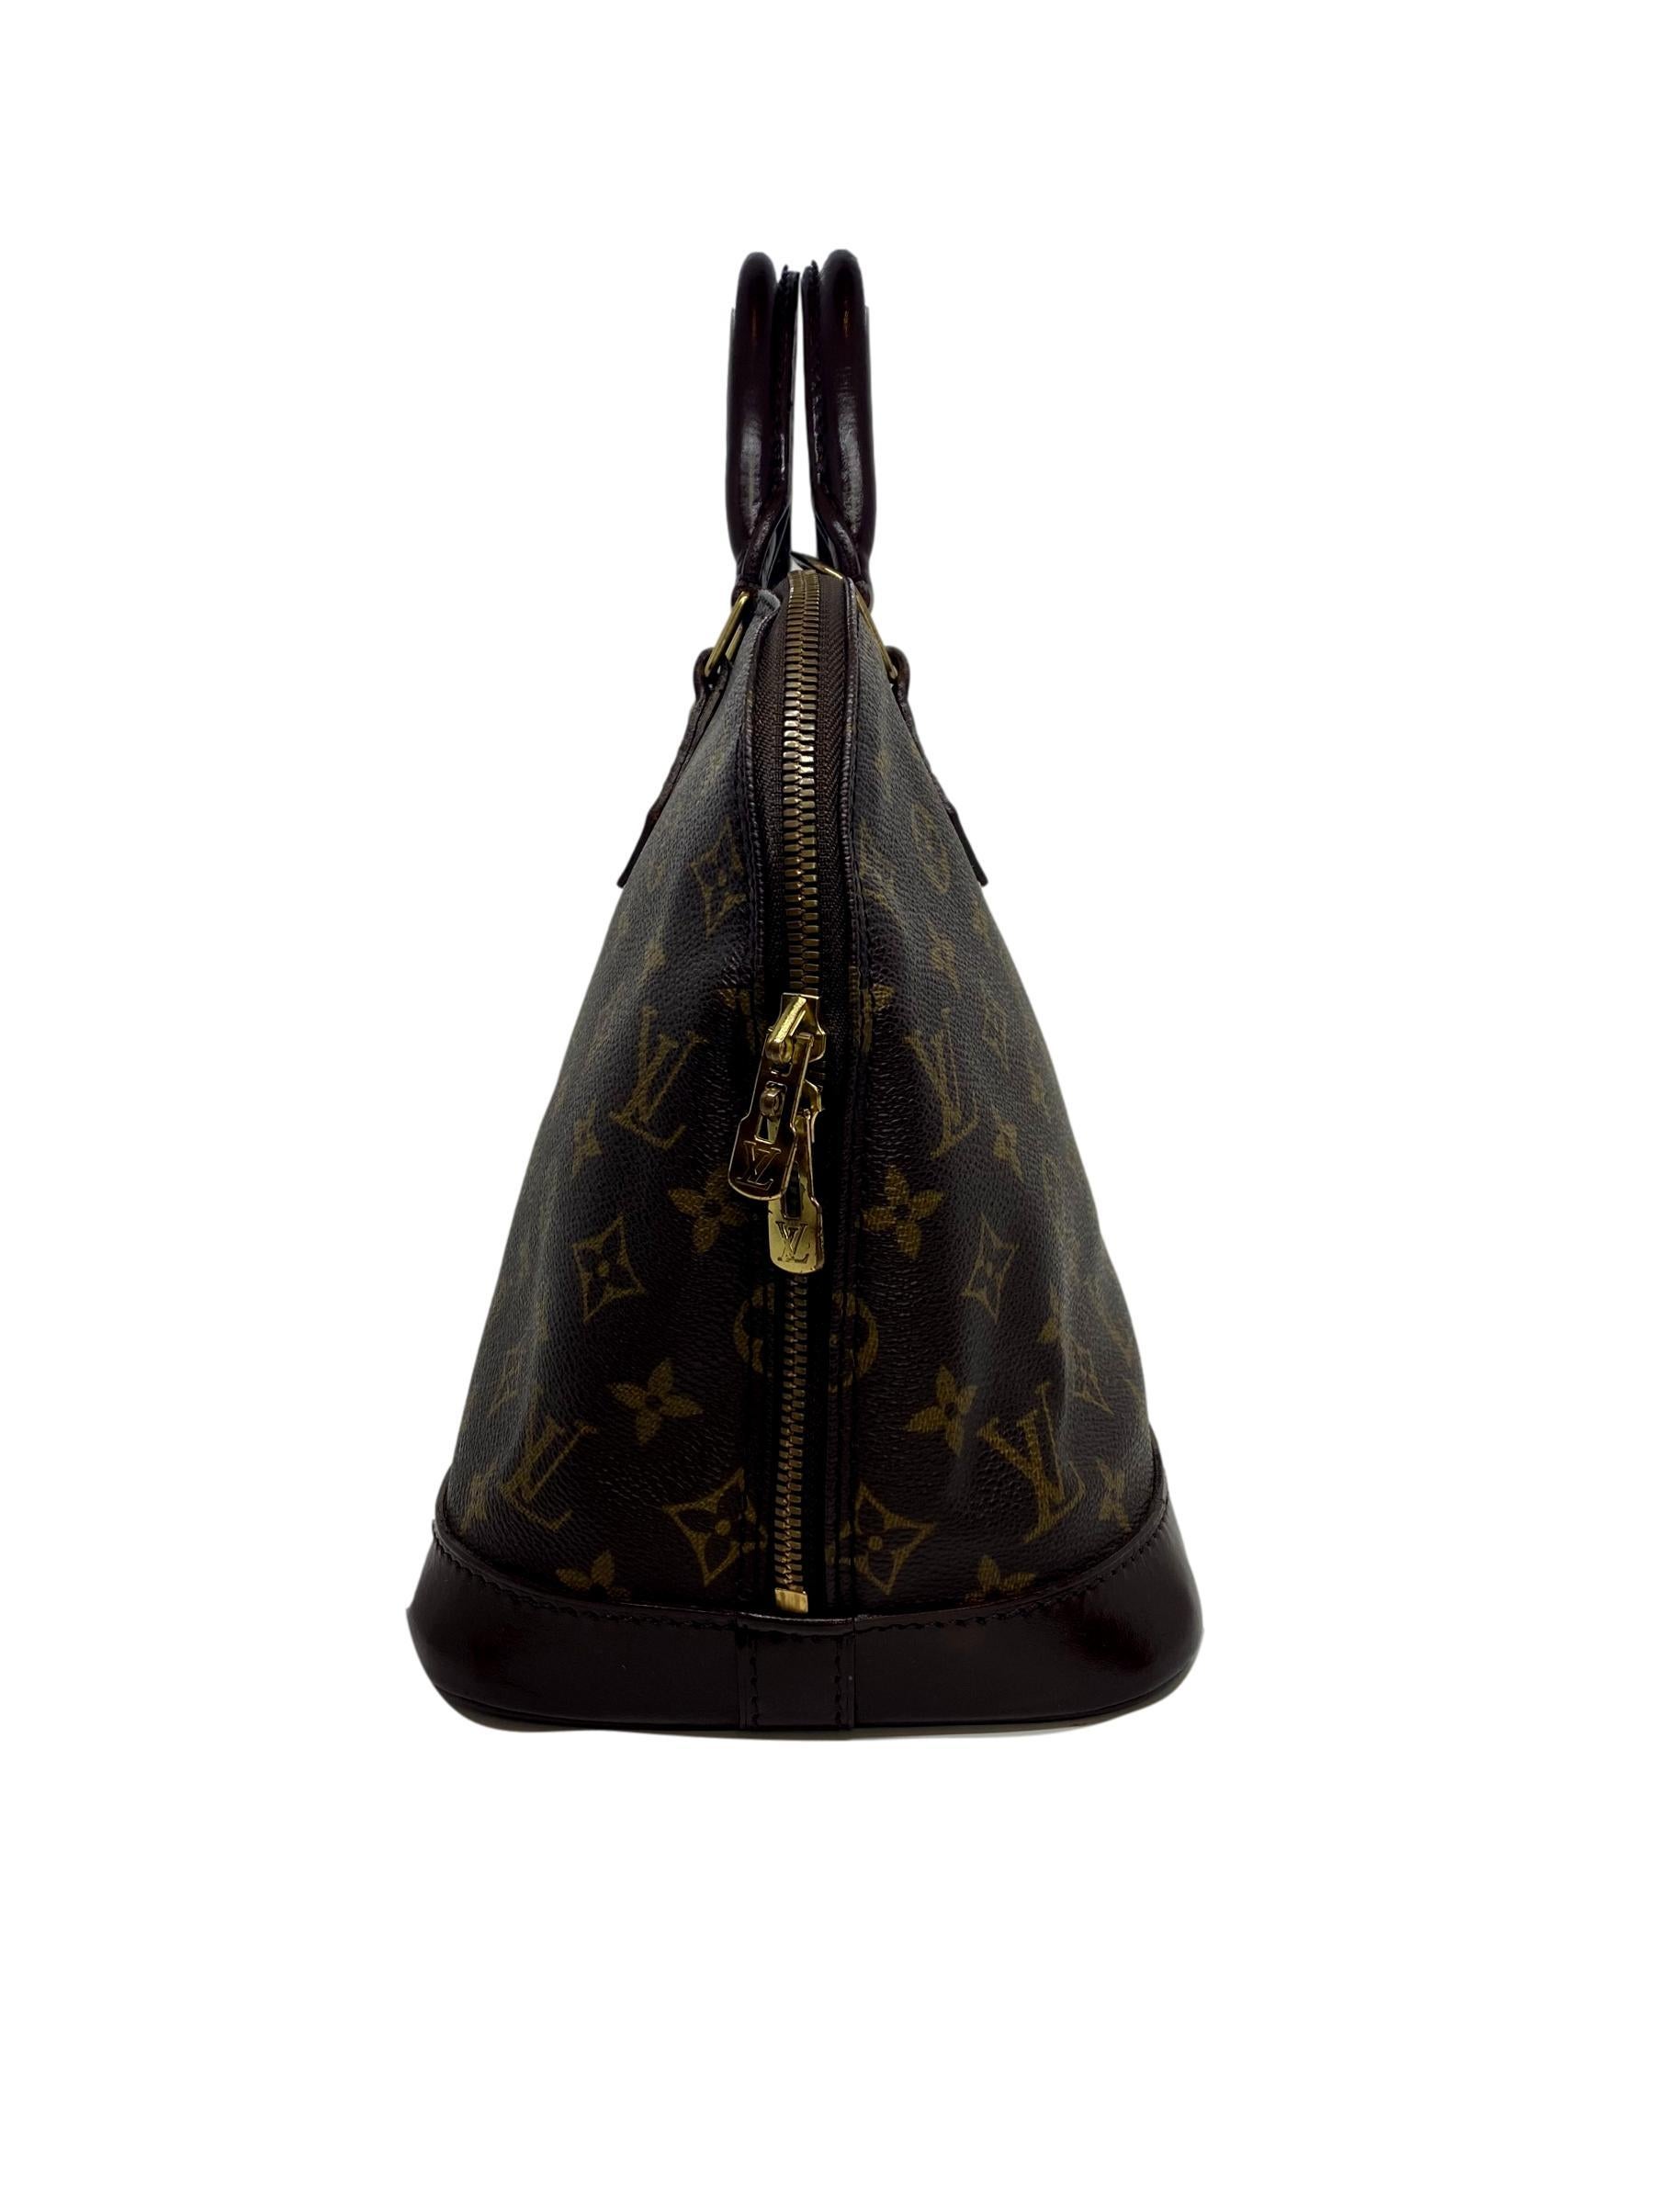 Black Louis Vuitton Alma PM Monogram Top Handle Handbag, France 1994. 